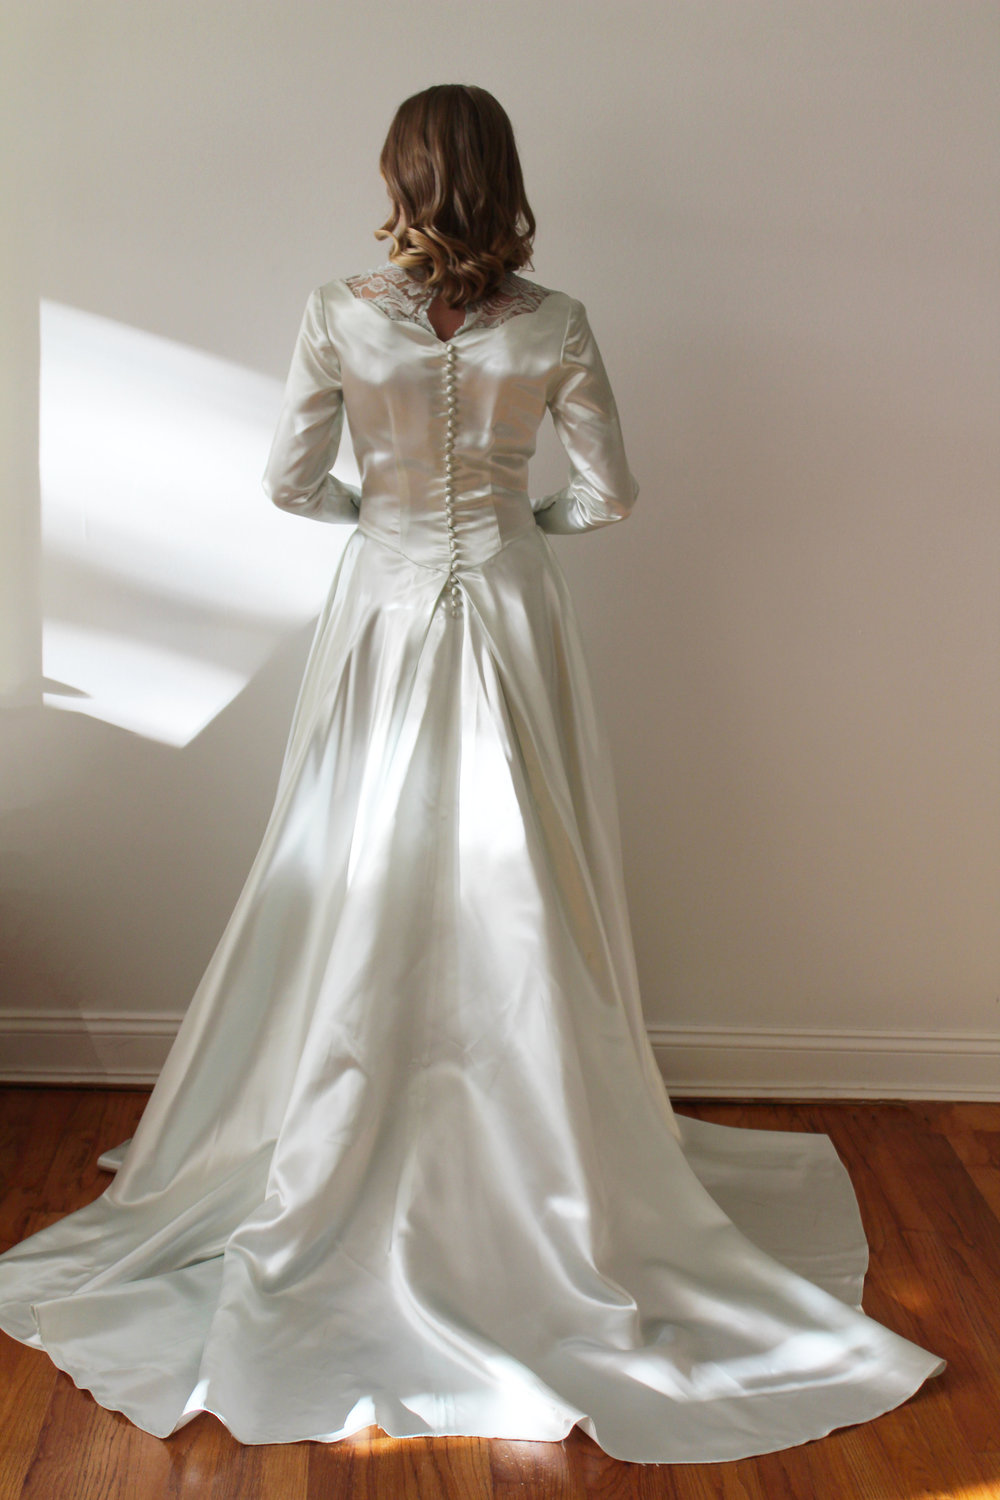 Viniodress Vintage Light Blue Wedding Gown with Veil Princess Dress VW1584 Custom Colors / US 8